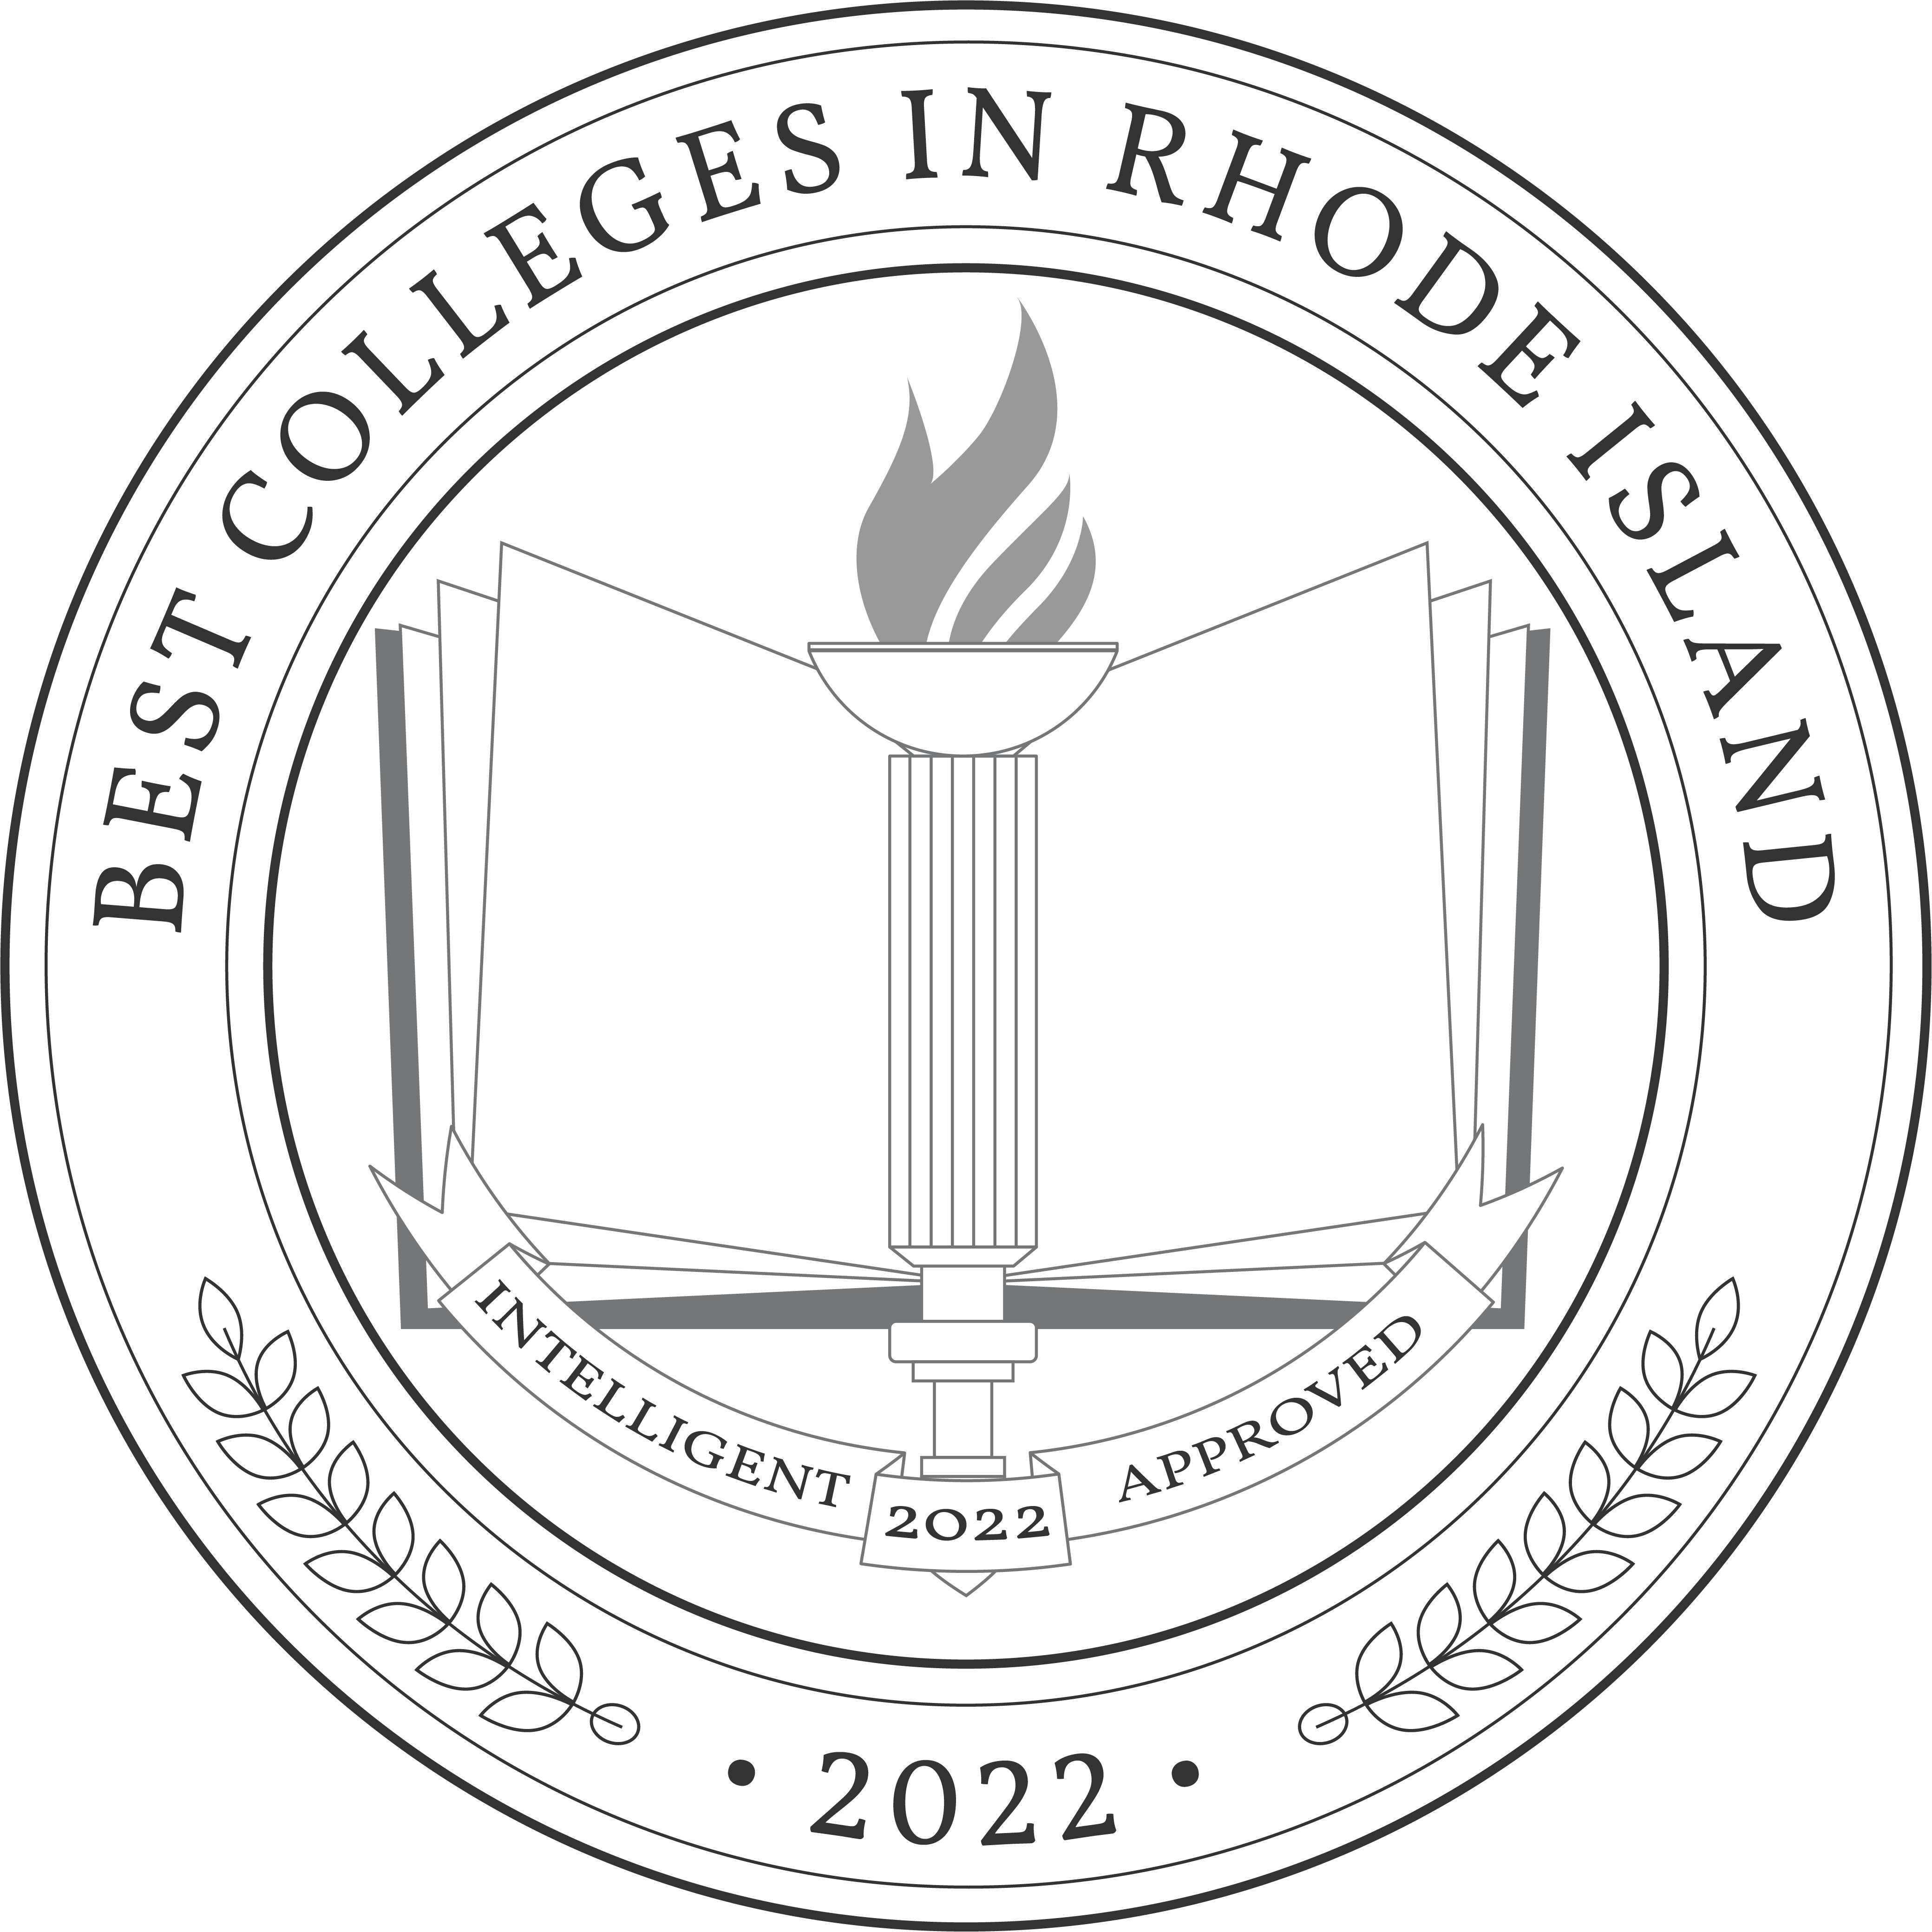 Best Colleges In Rhode Island